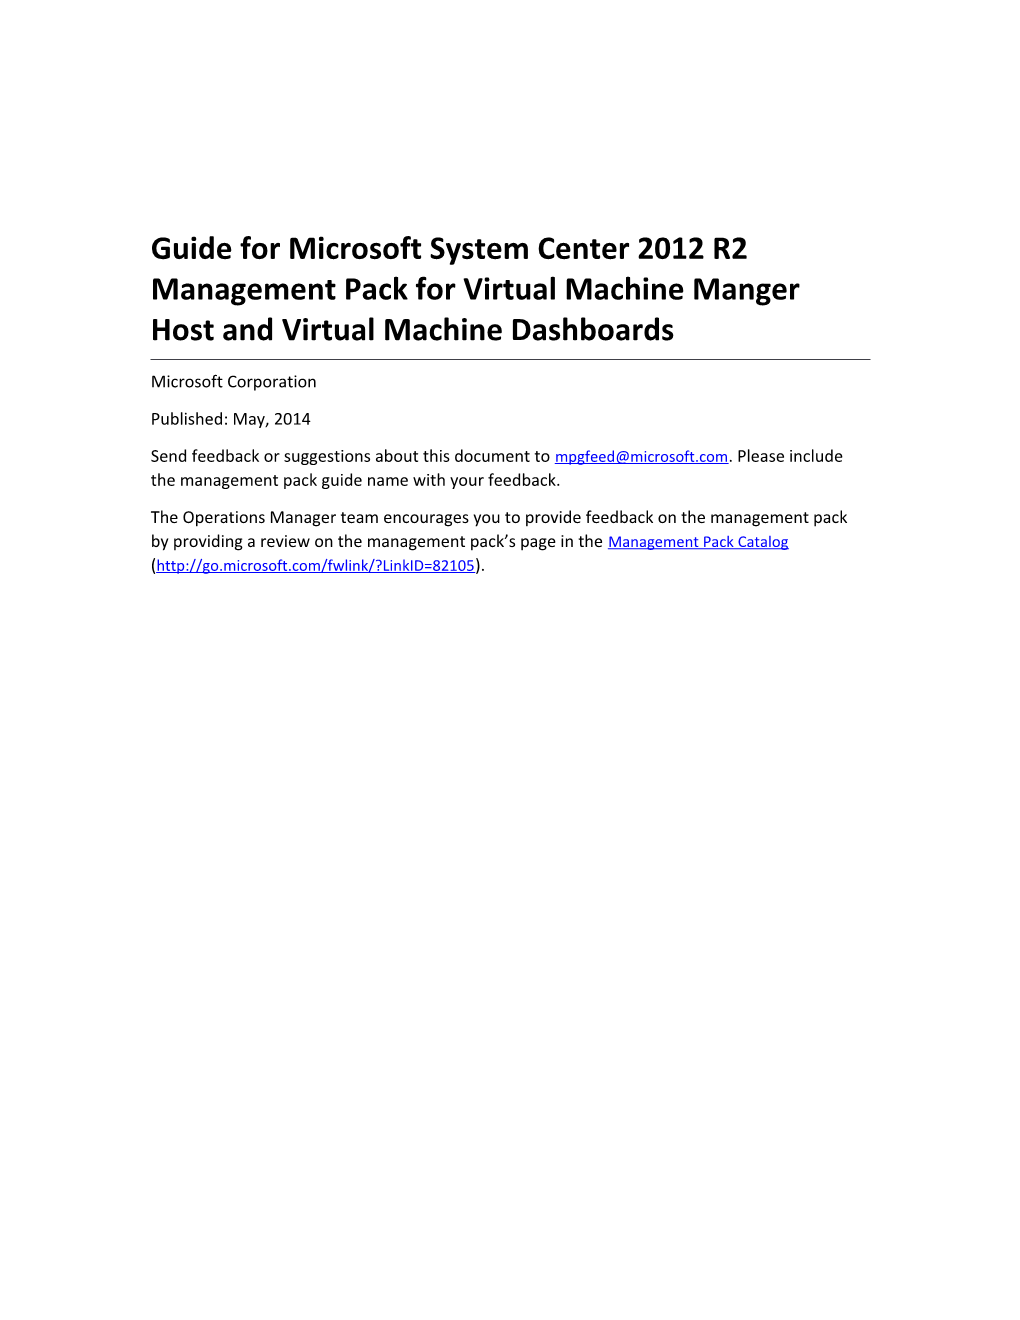 Guide for Microsoft System Center 2012 R2 Management Pack for Virtual Machine Manger Host